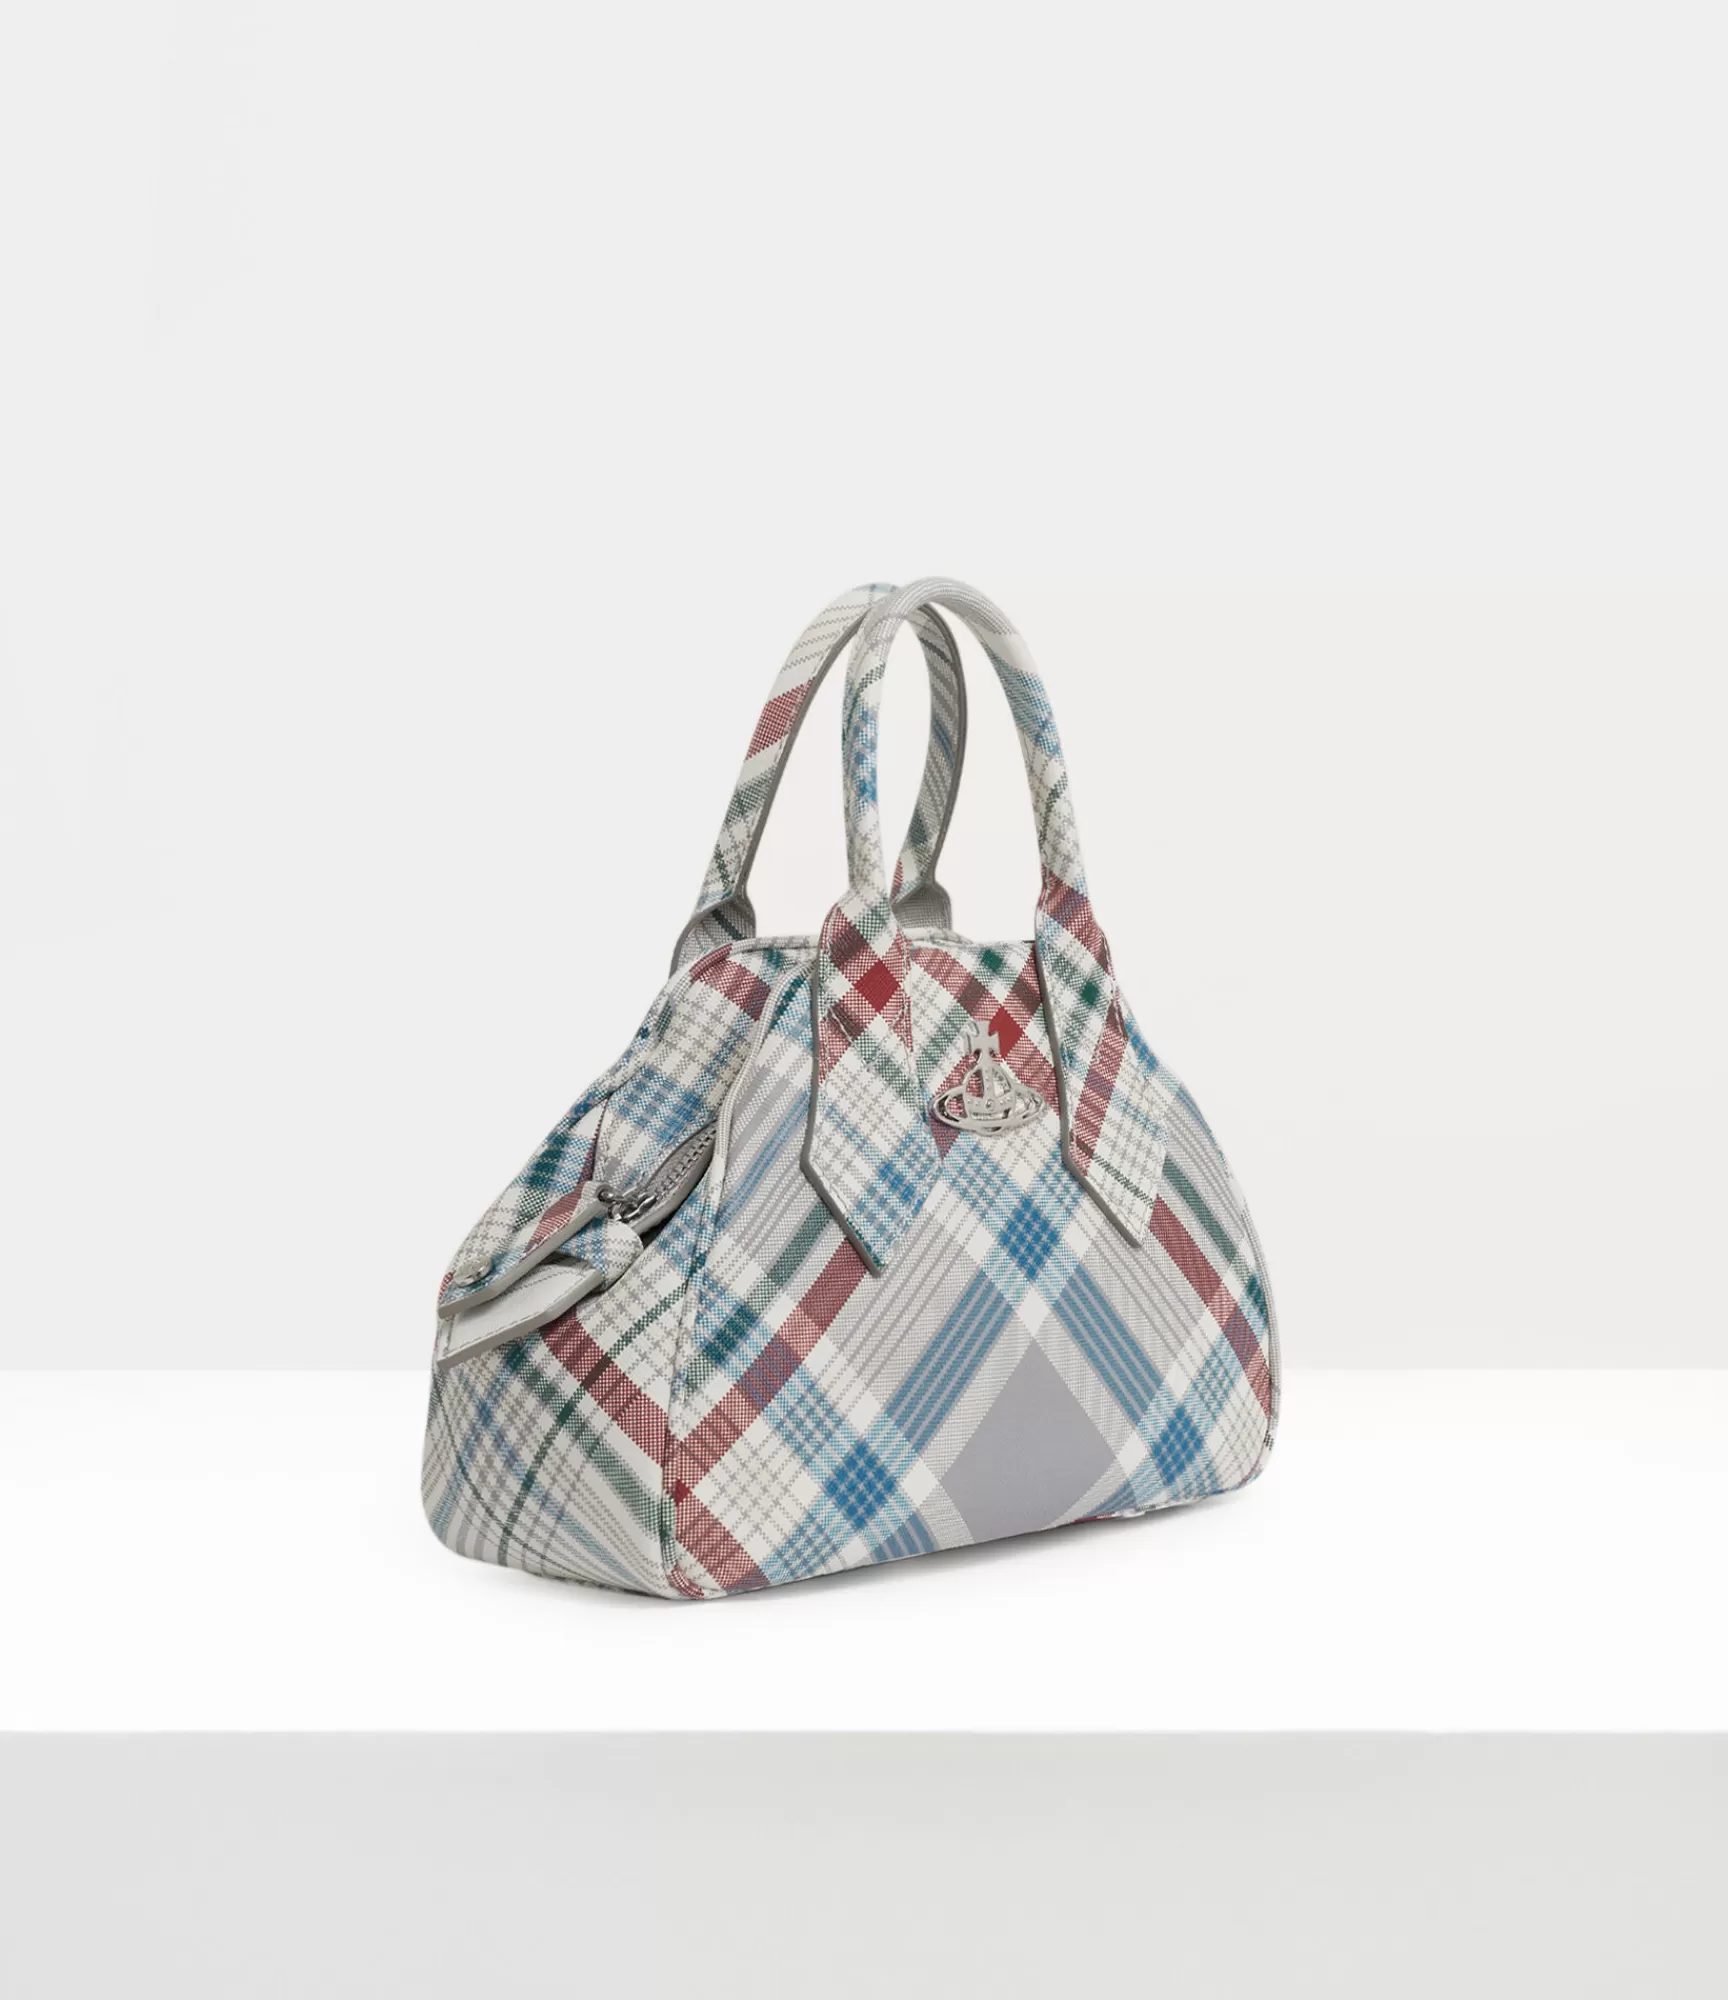 Vivienne Westwood Handbags*Yasmine small bag Madras Check